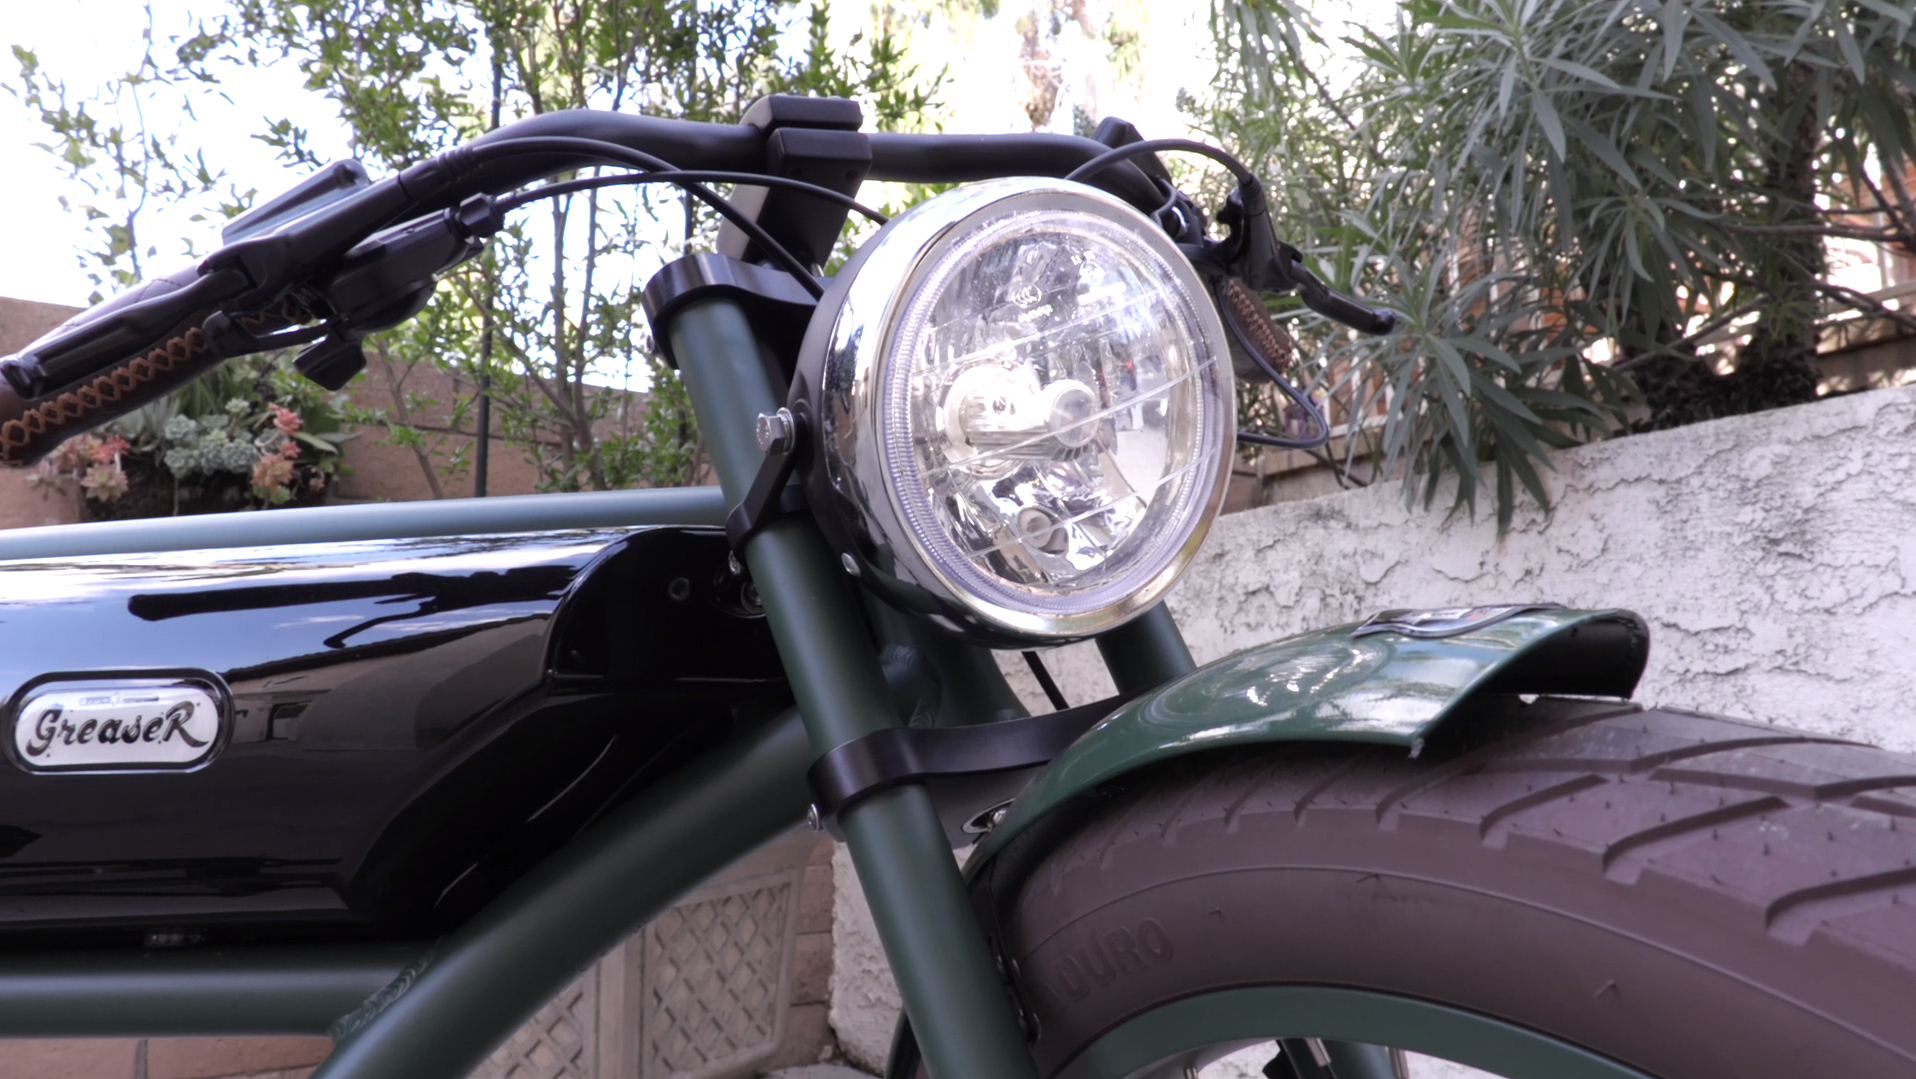 Michael Blast Greaser E-Bike, lights_Sypnotix Review.png